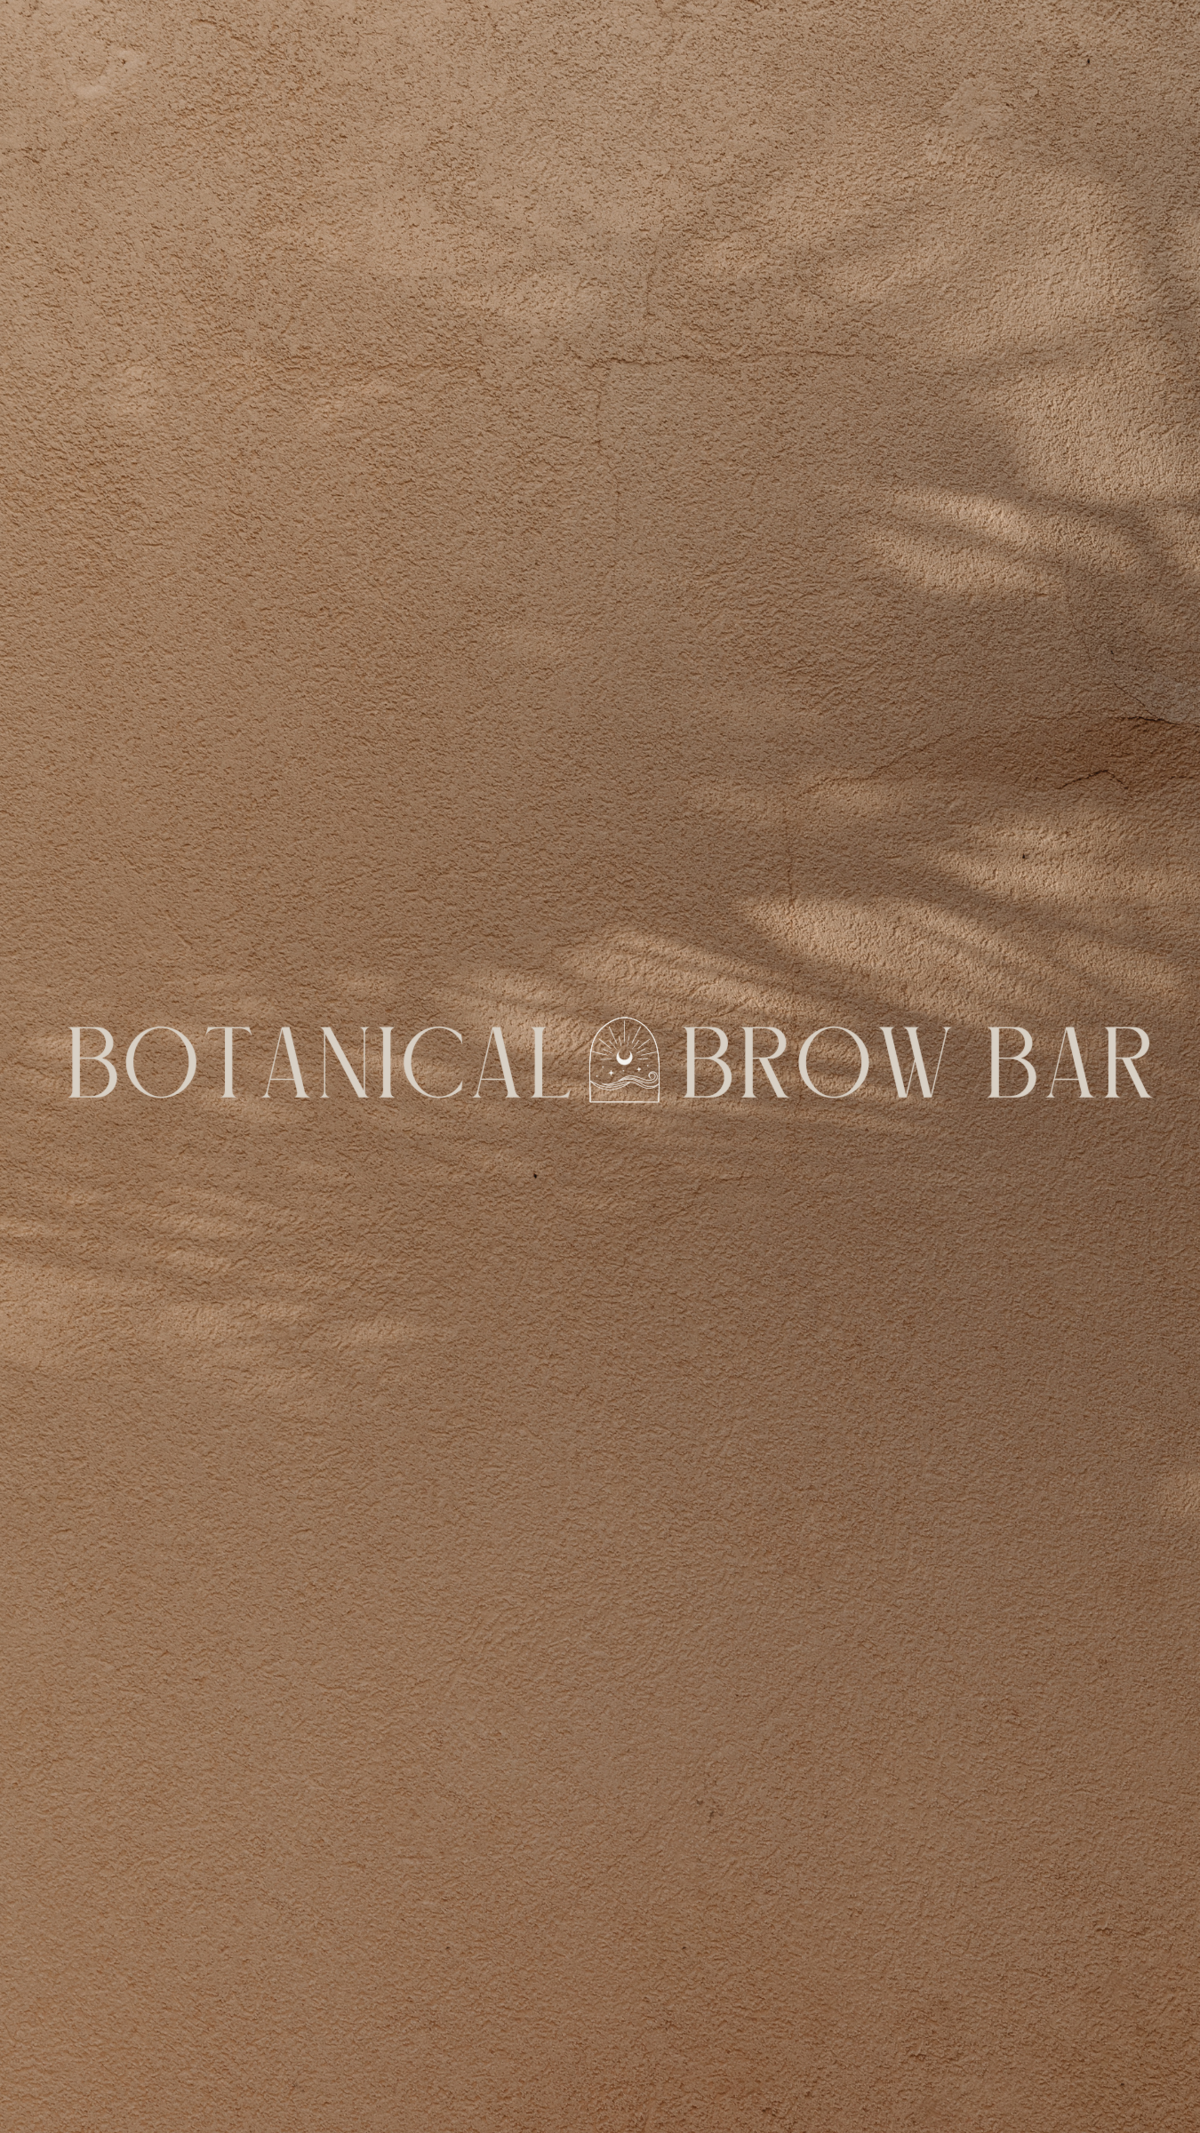 Botanical Brow Bar- Website and Brand Client7